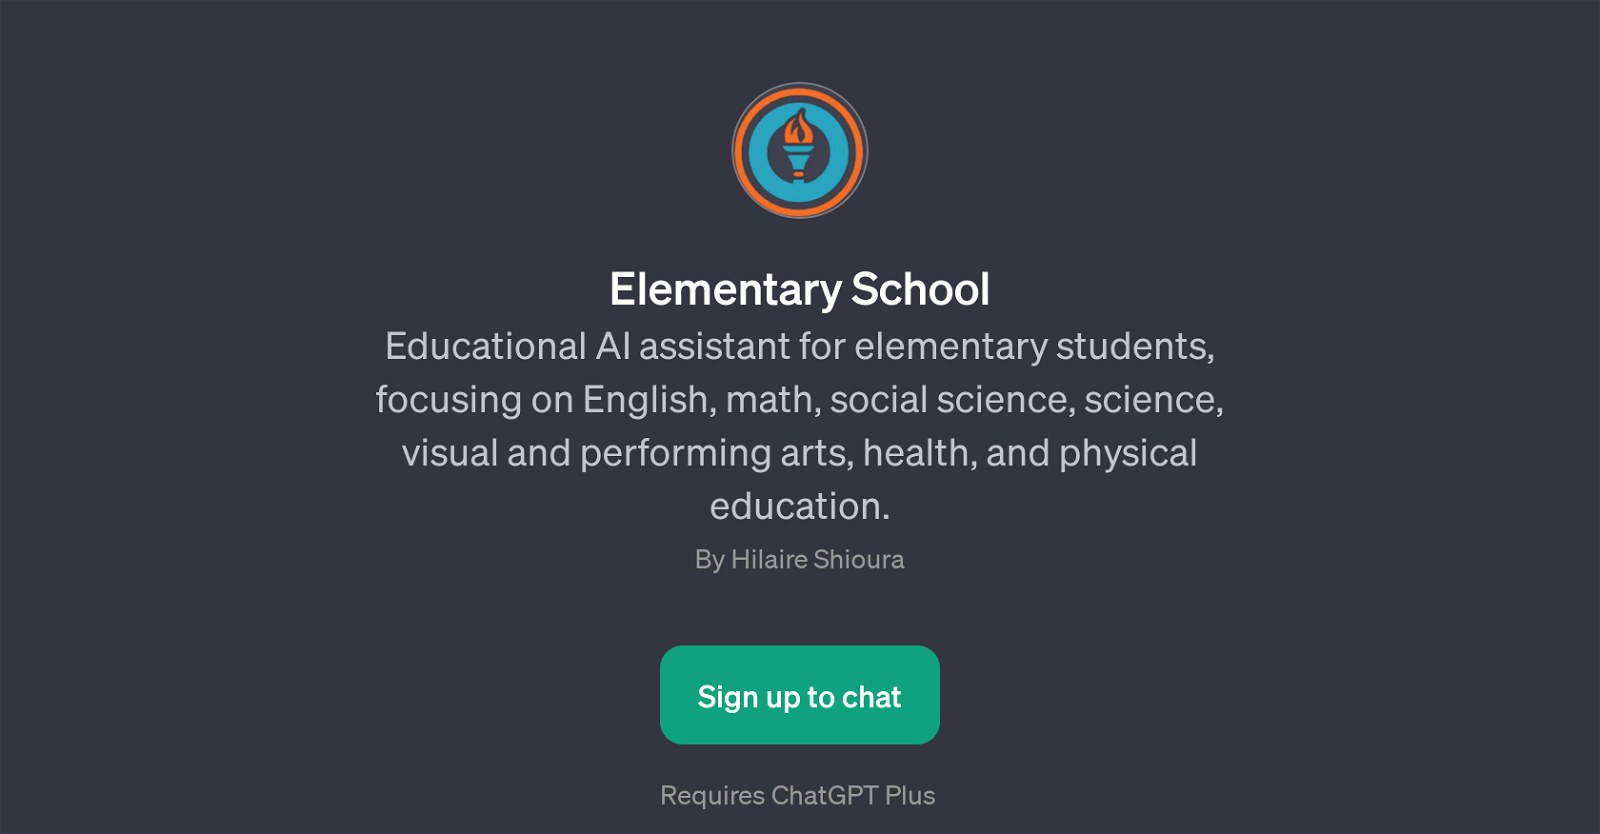 Elementary School website